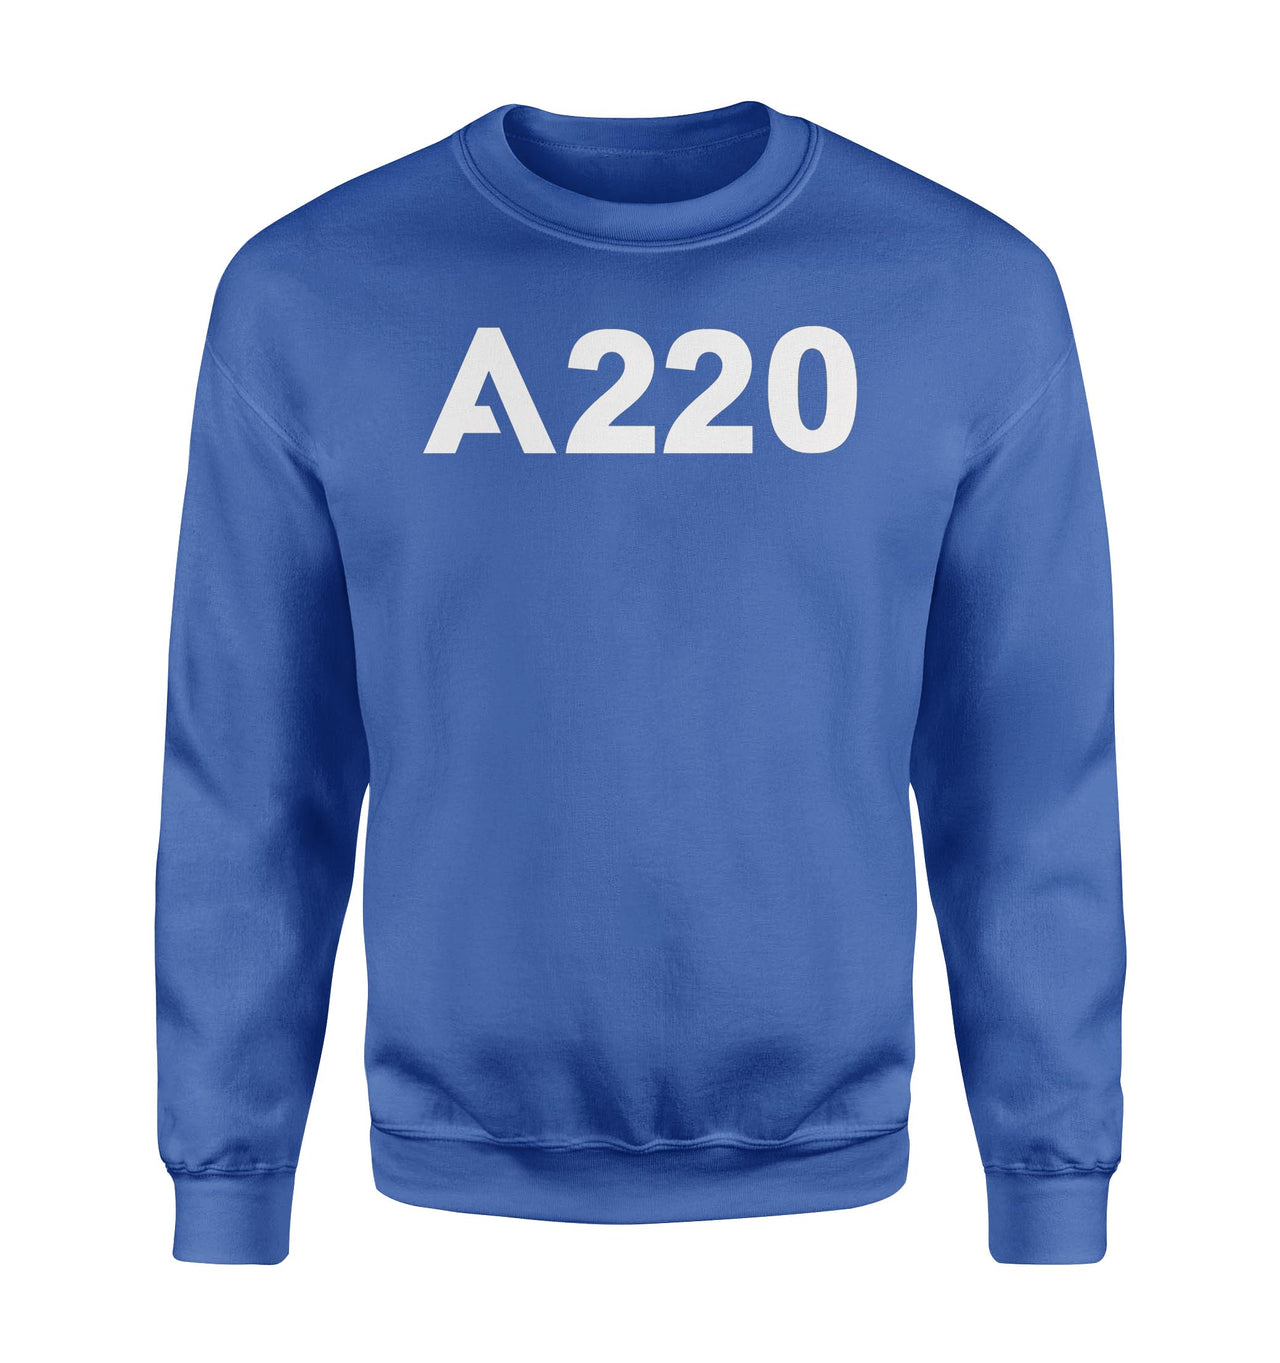 A220 Flat Text Designed Sweatshirts